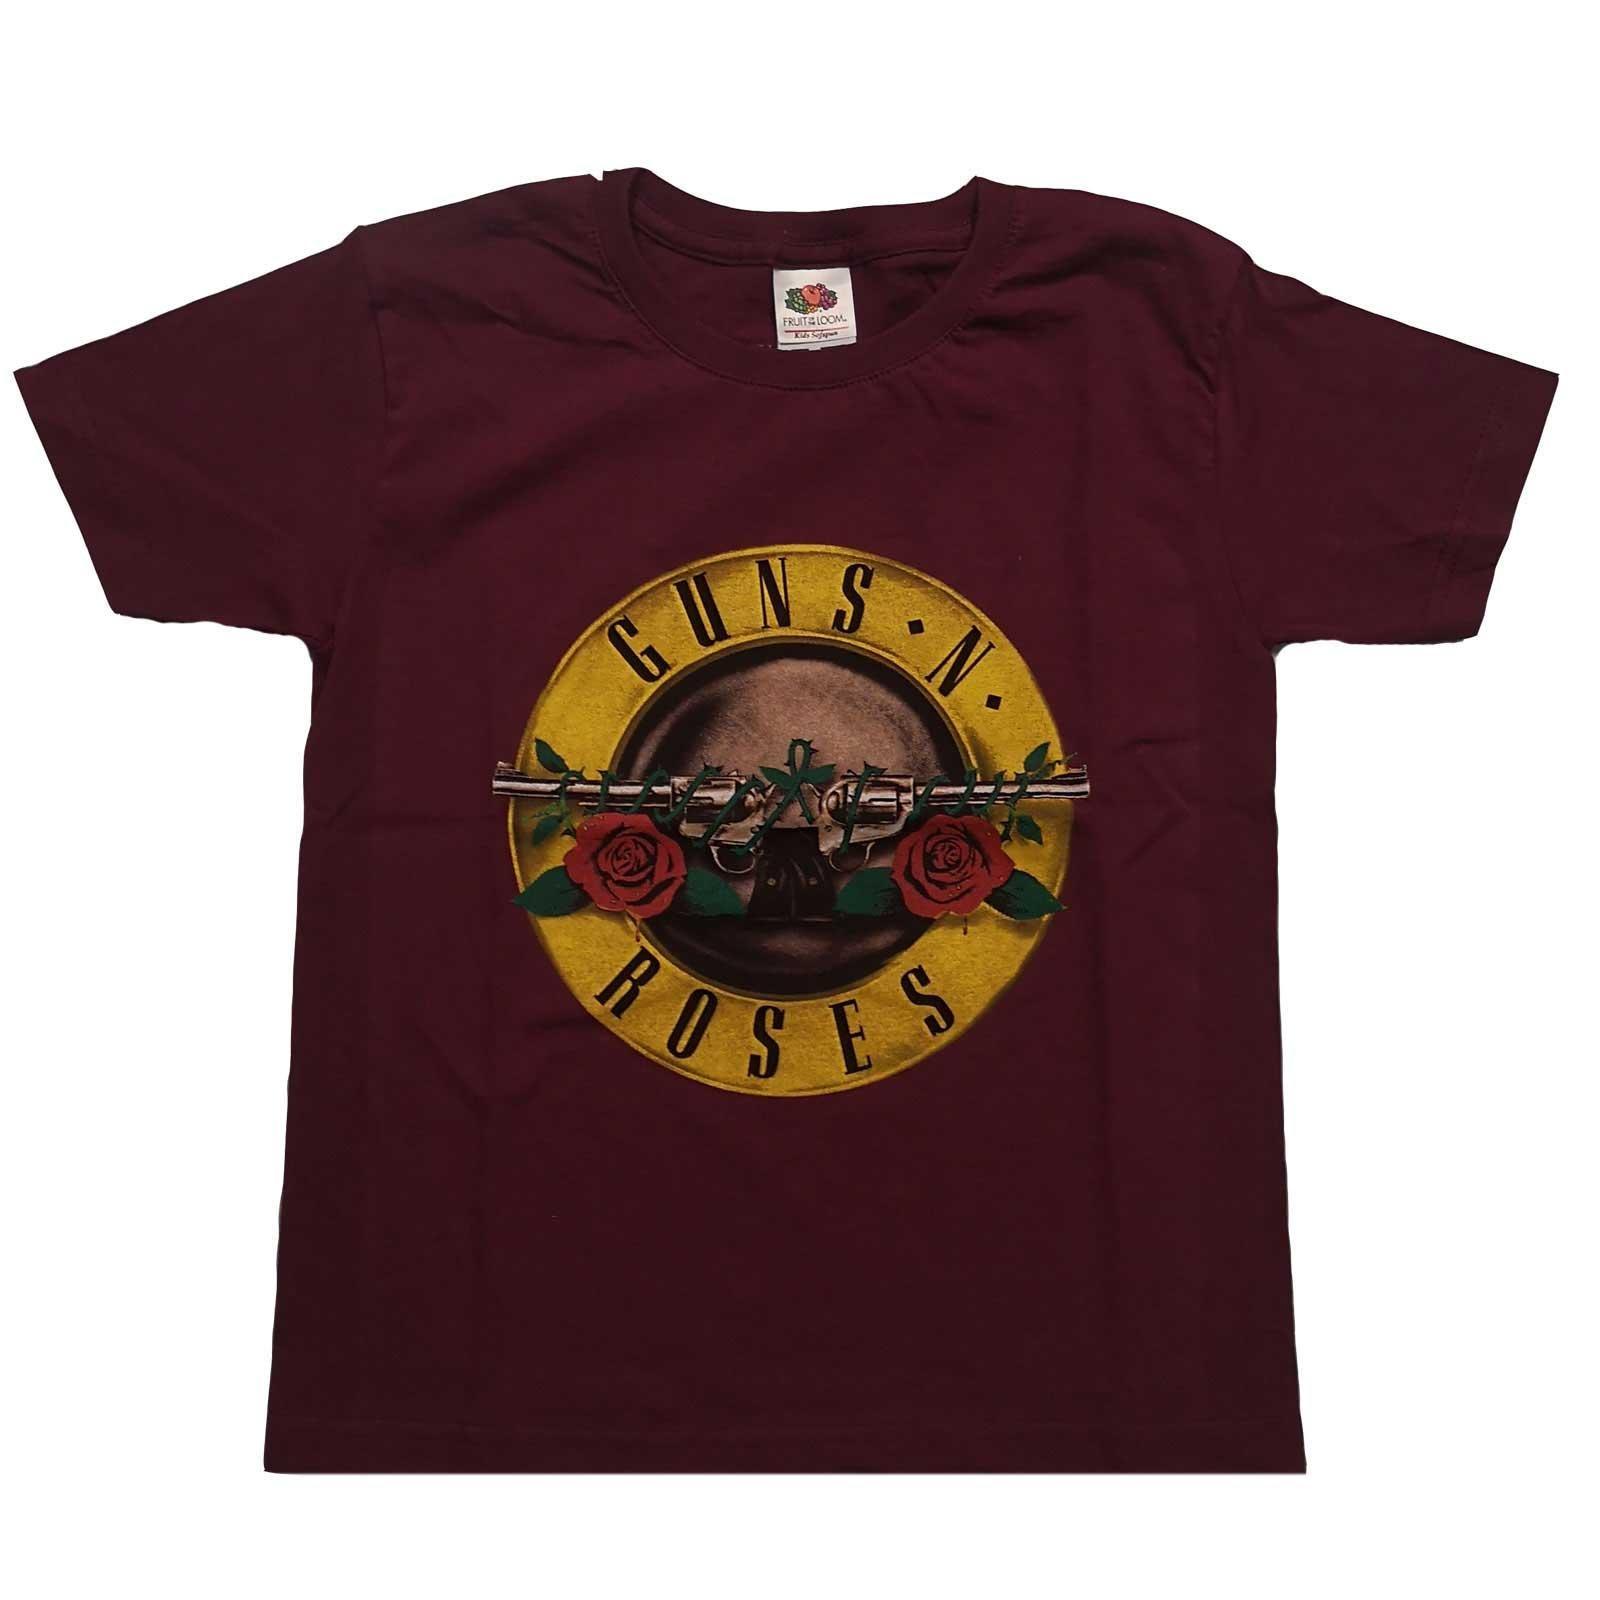 Tshirt Jungen Bordeaux 140 von Guns N Roses